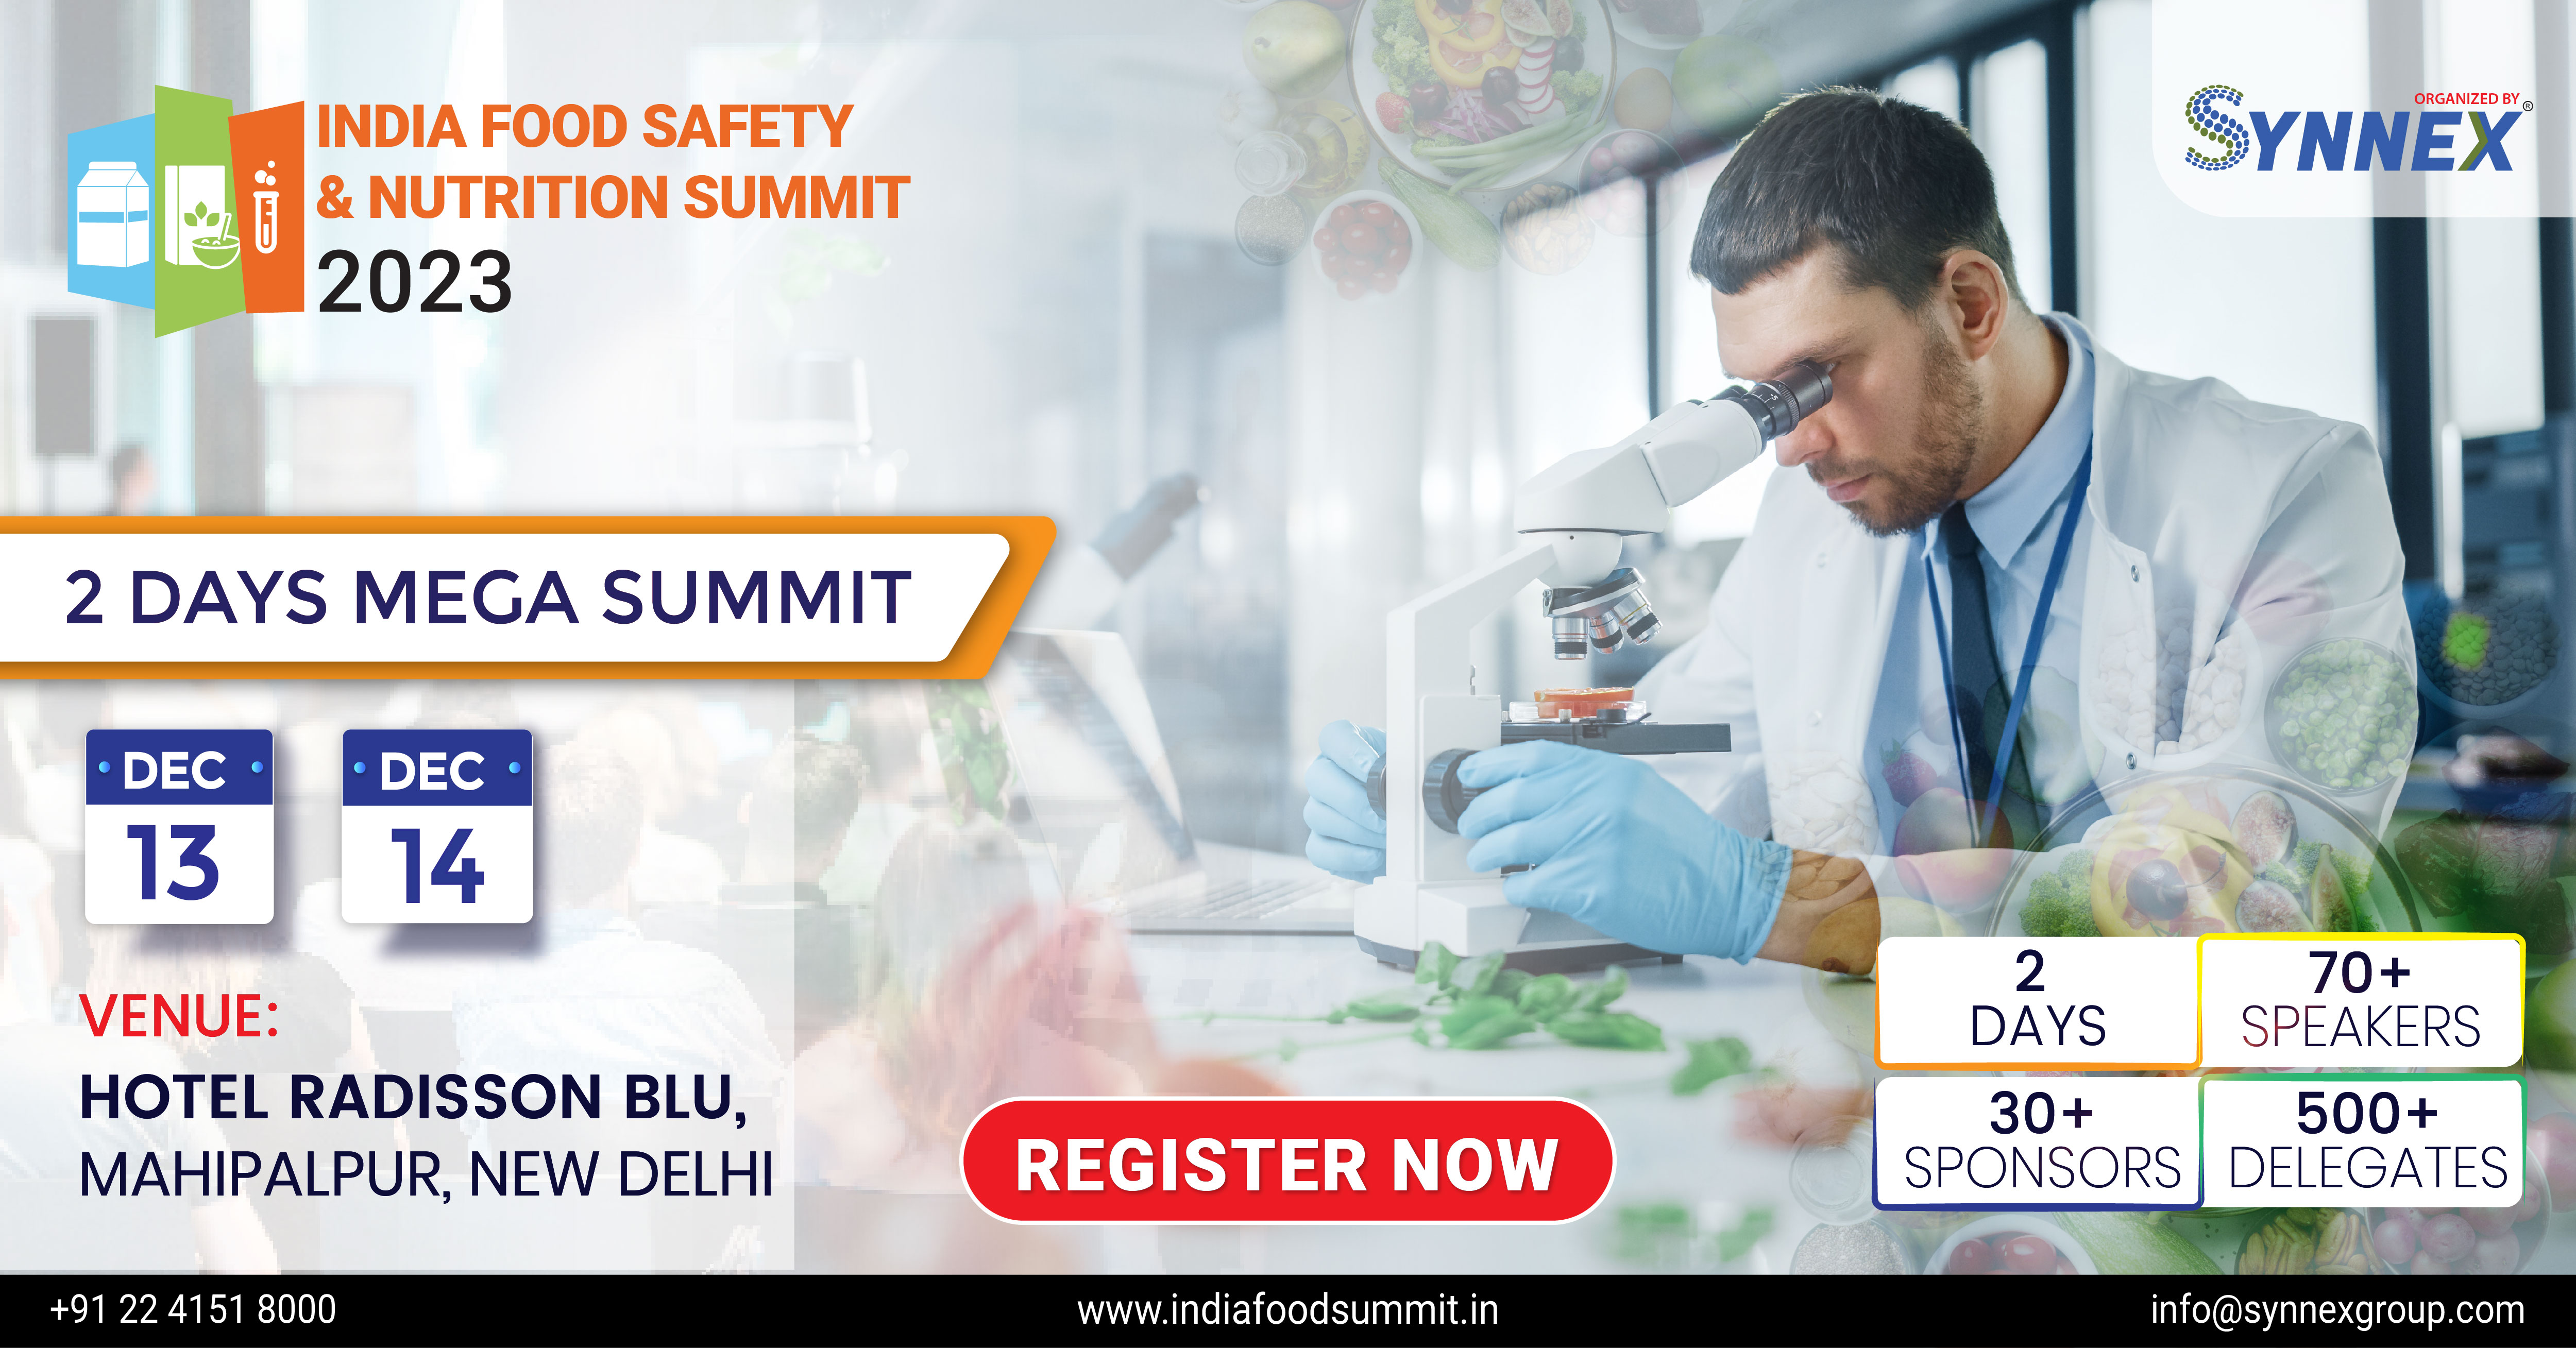 India Food Safety & Nutrition Summit 2023, New Delhi, Delhi, India